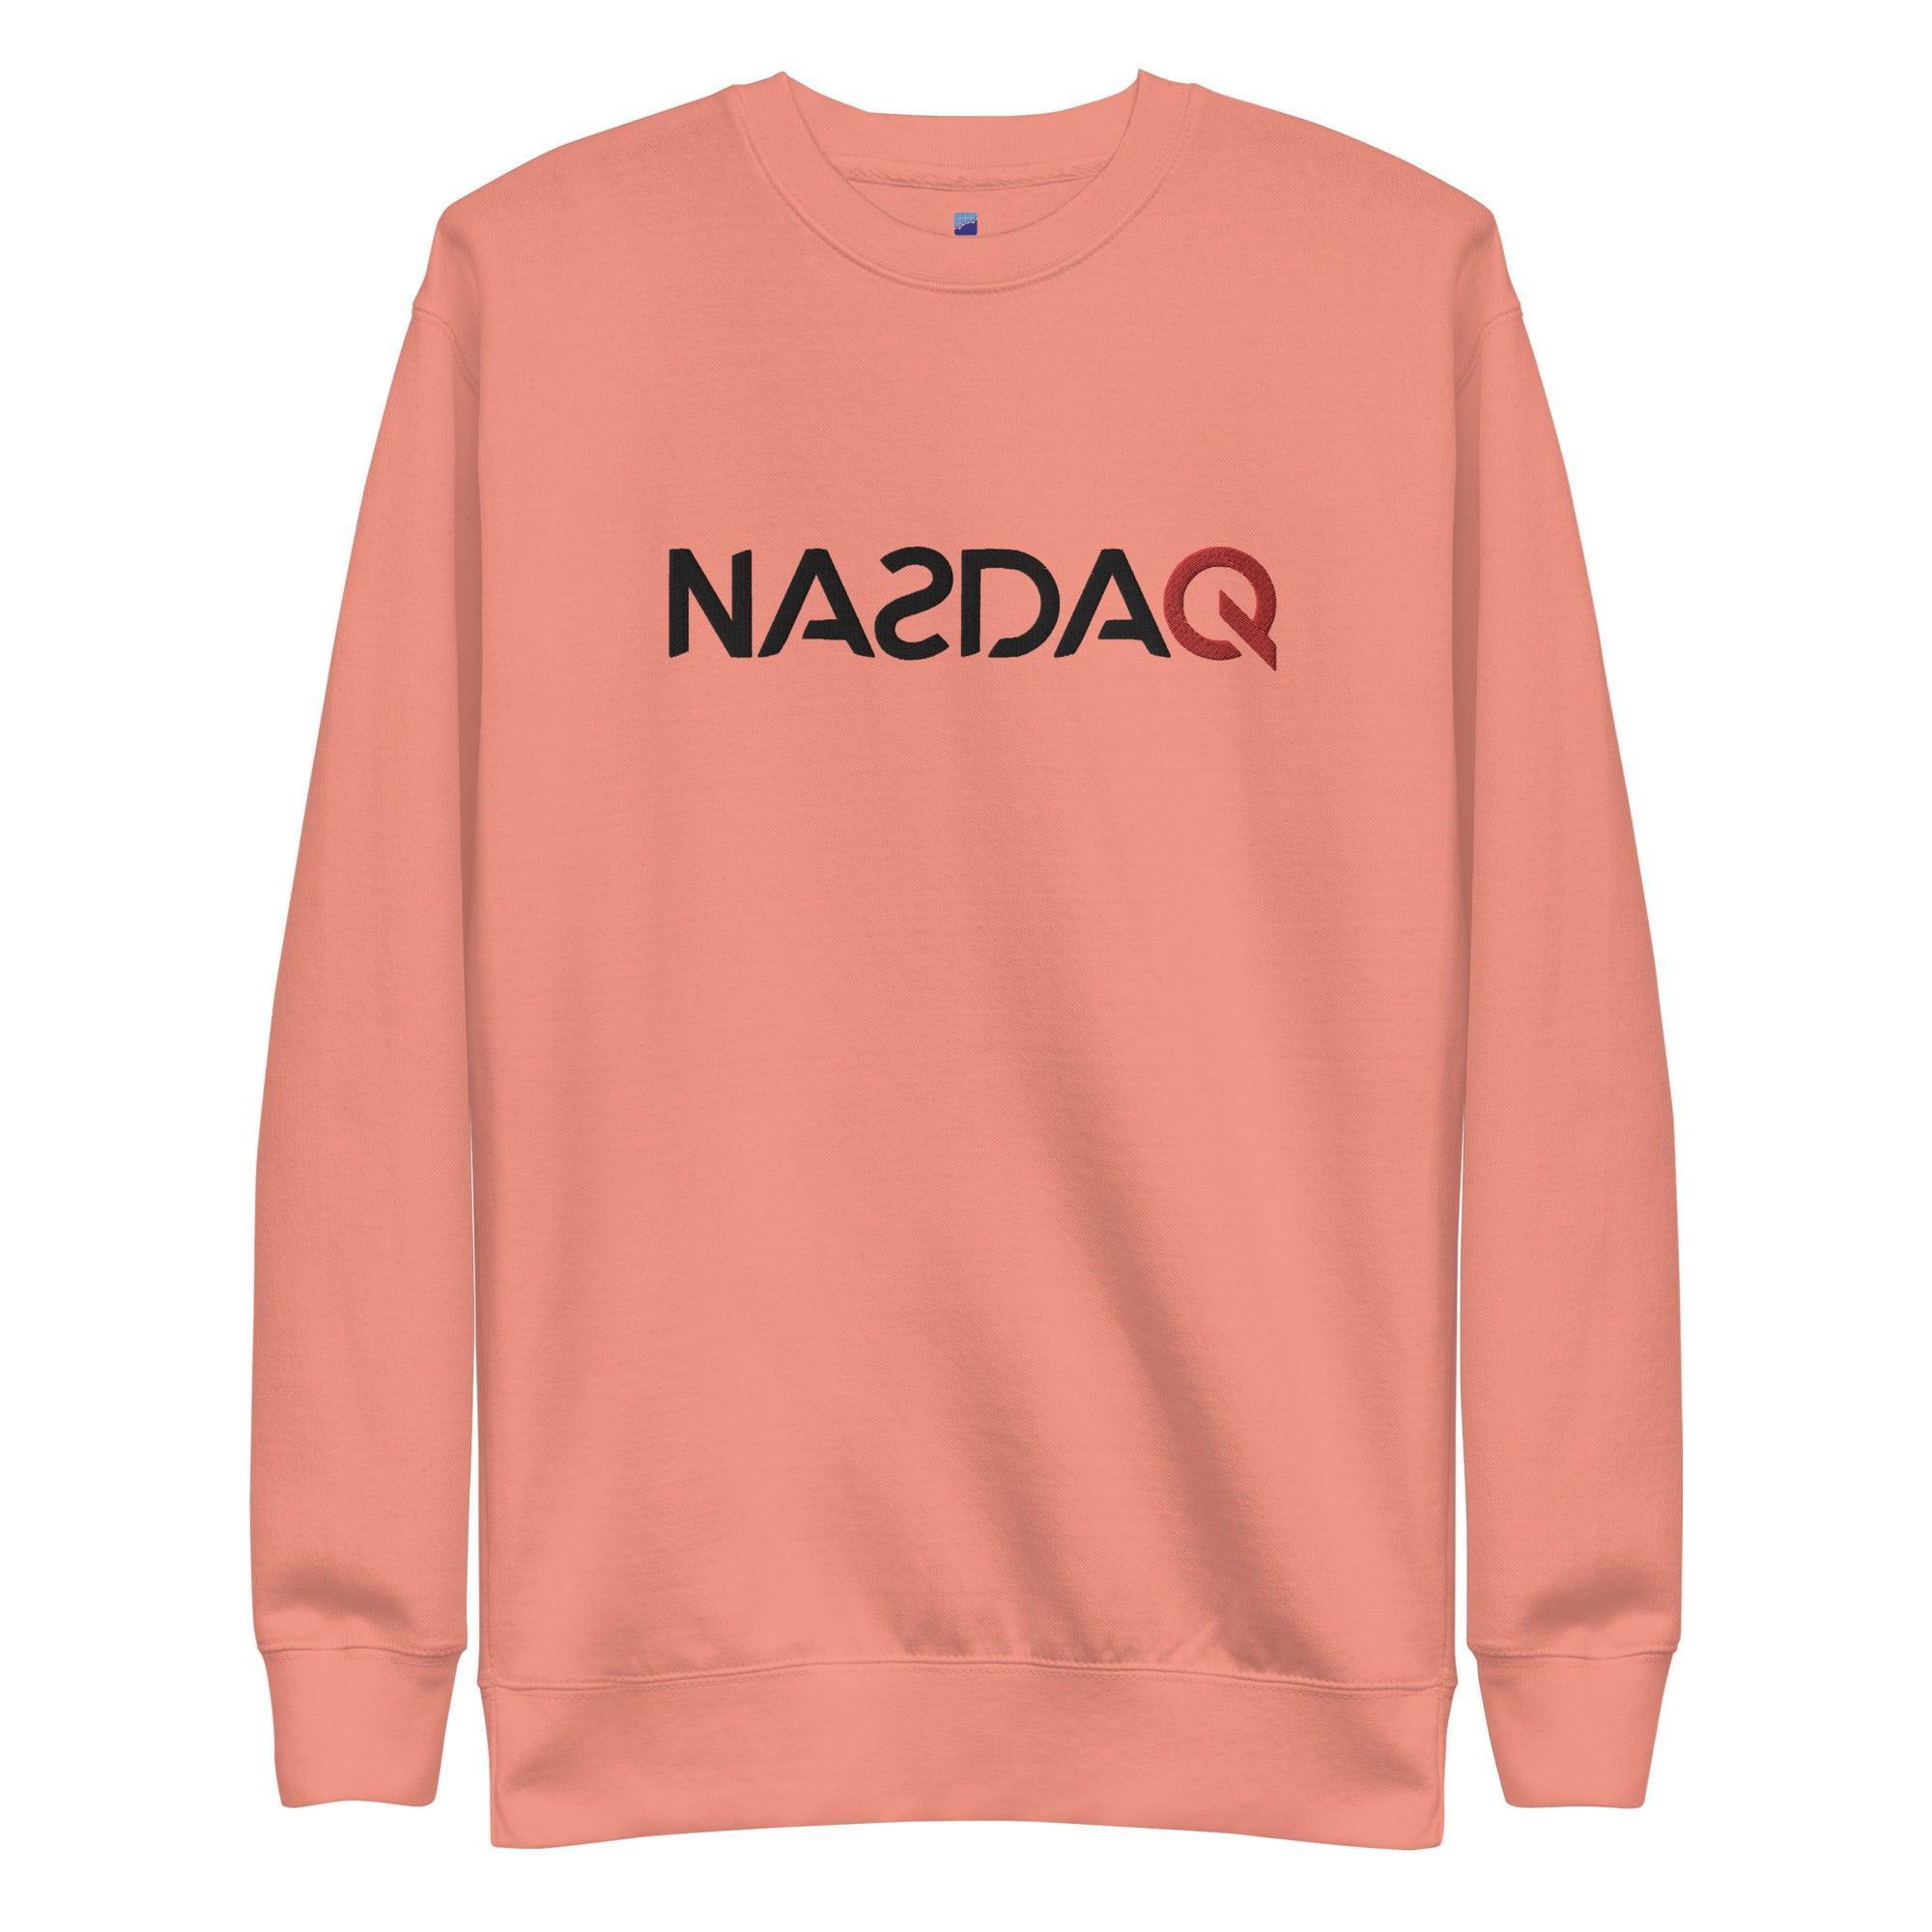 Nasdaq Stock Market Exchange Sweatshirt - InvestmenTees